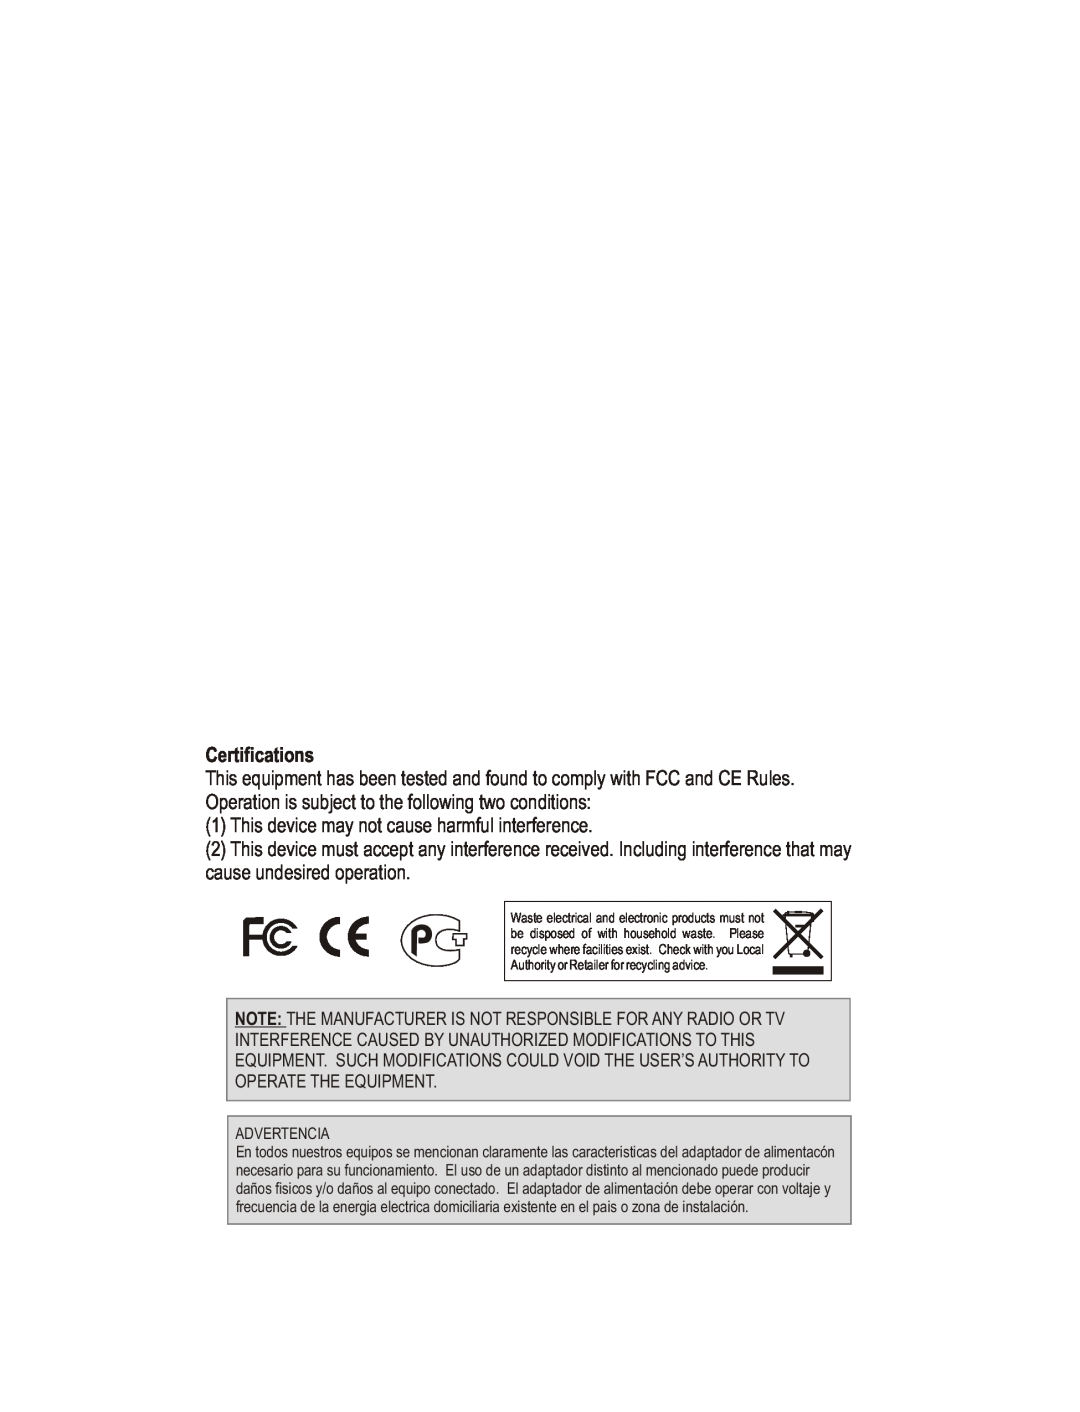 TRENDnet TK-407K manual Certifications 